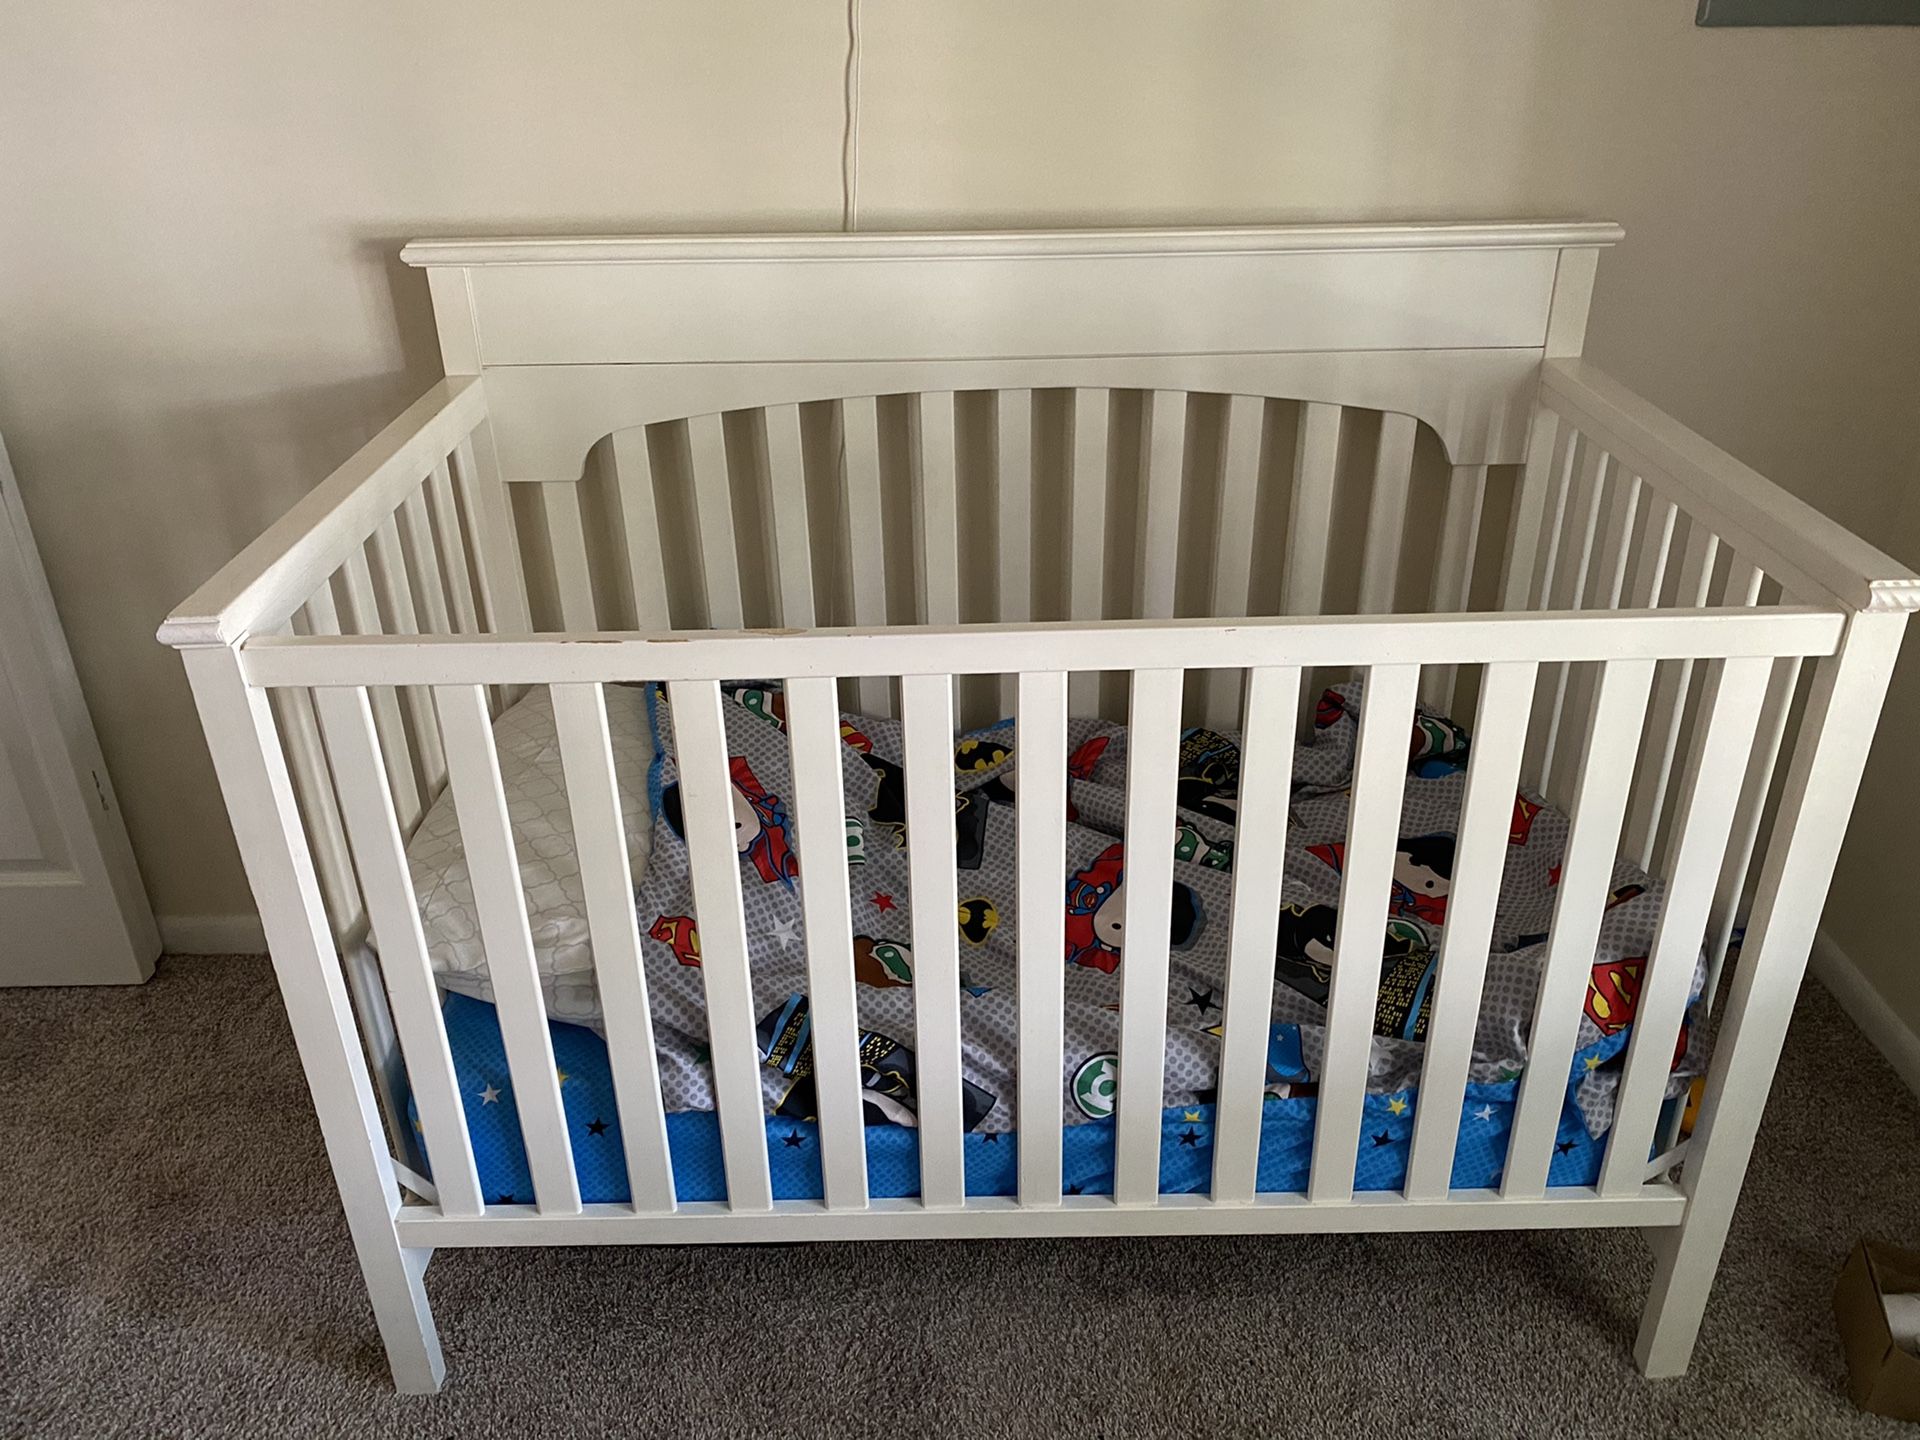 Graco baby crib